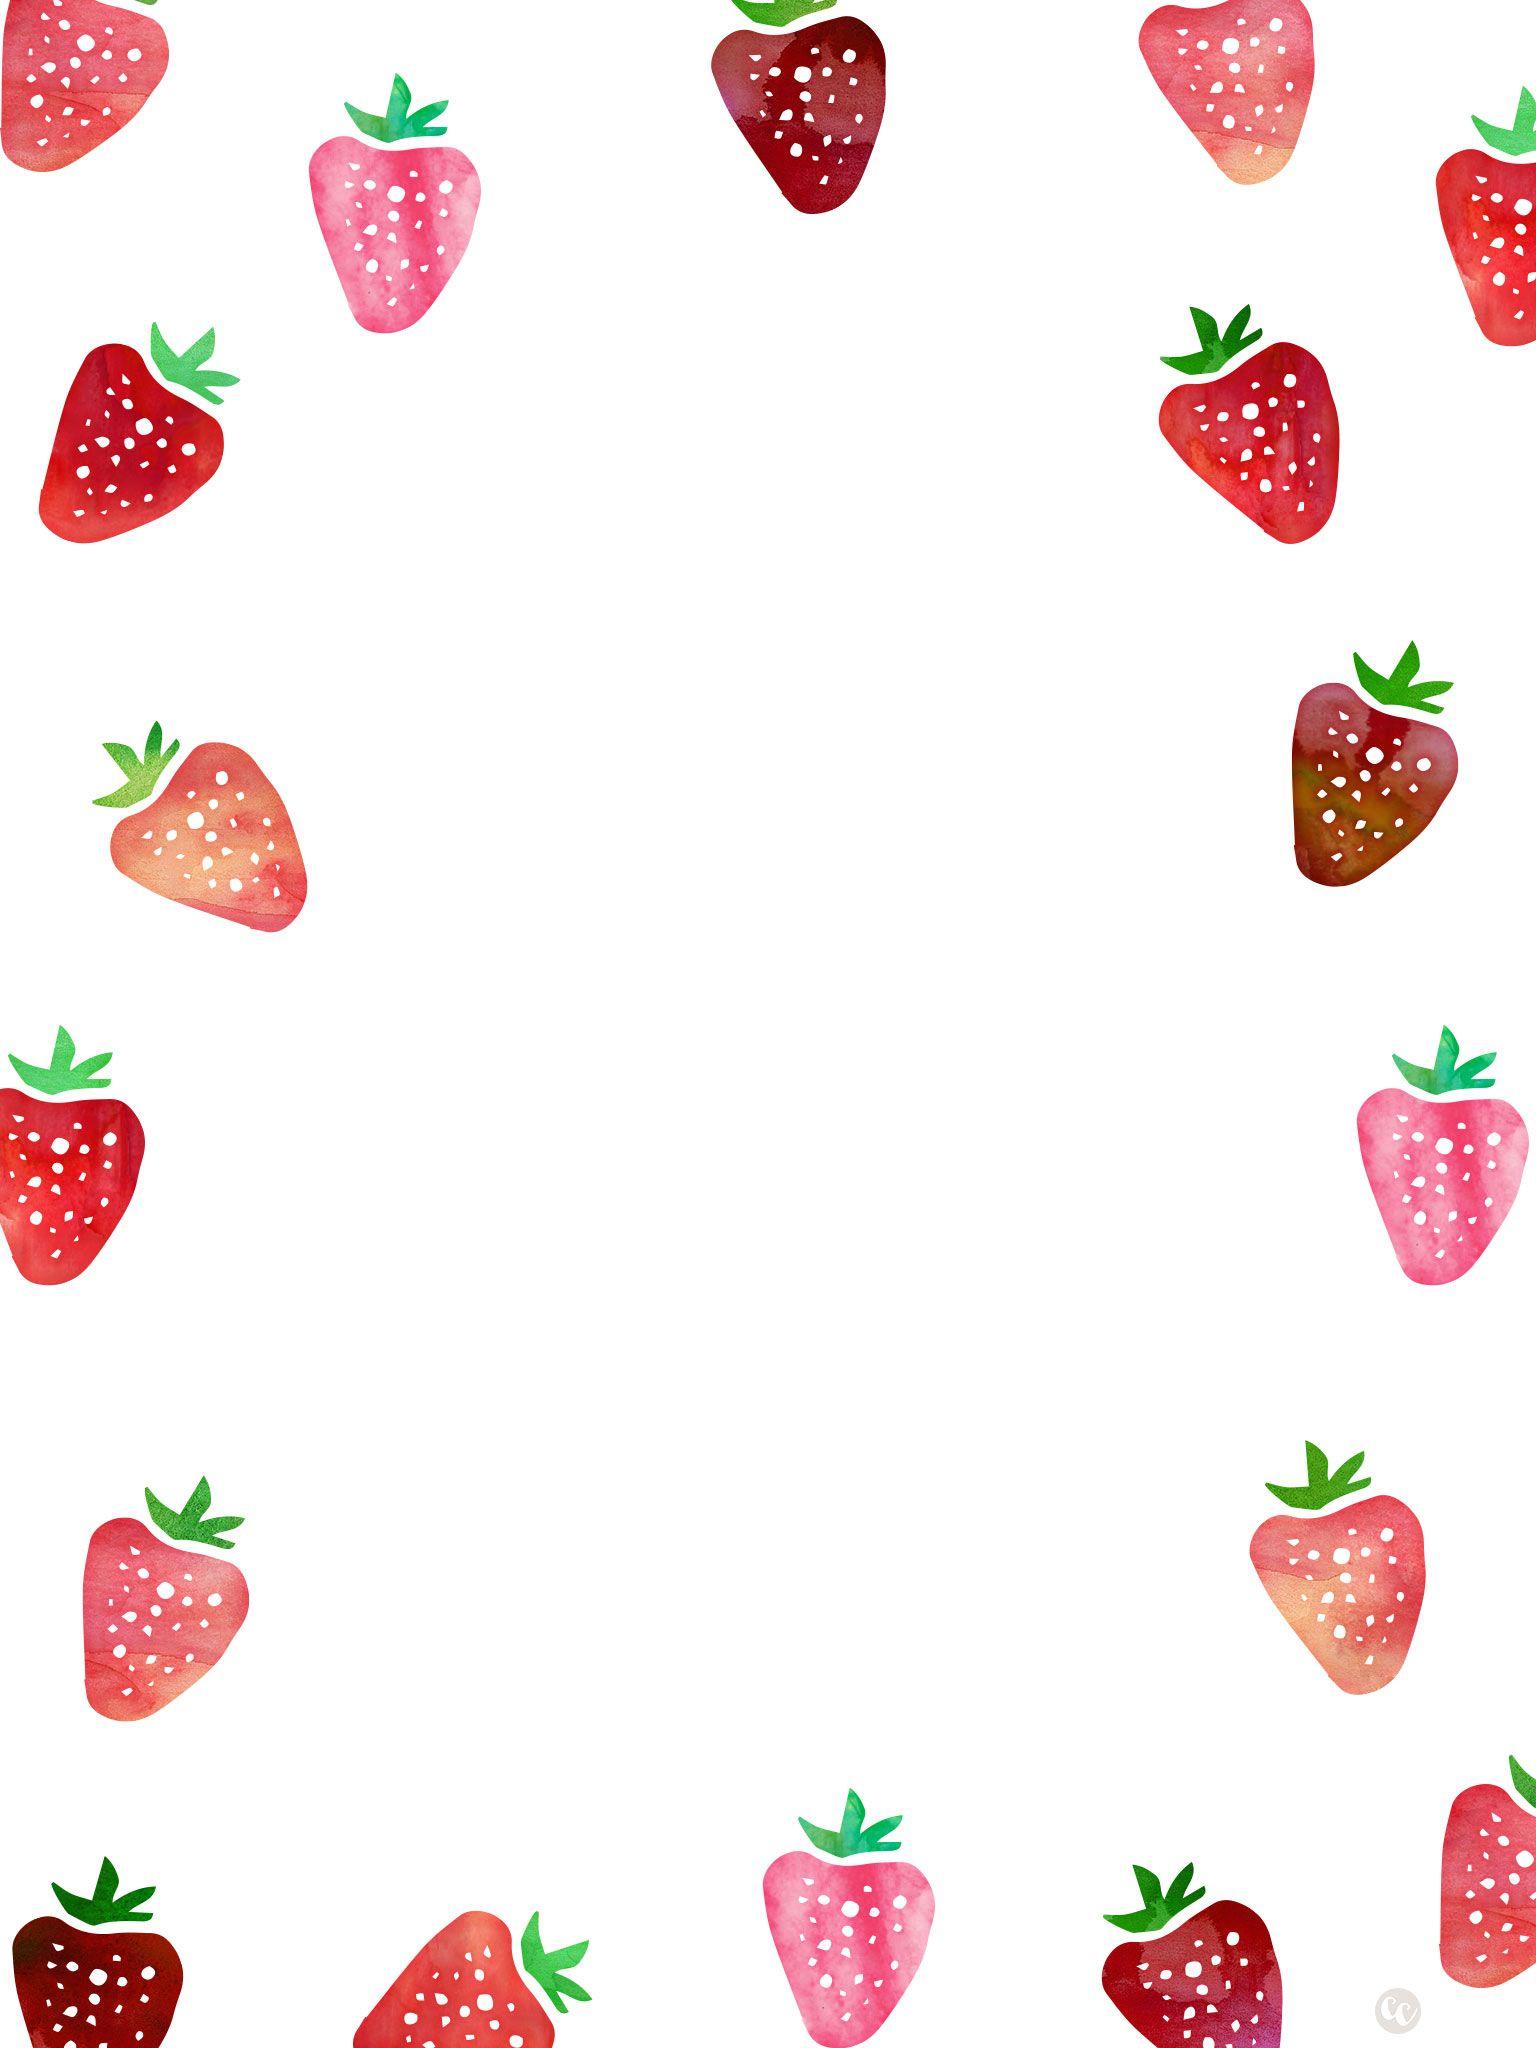 Free Wallpaper Downloads: Strawberries